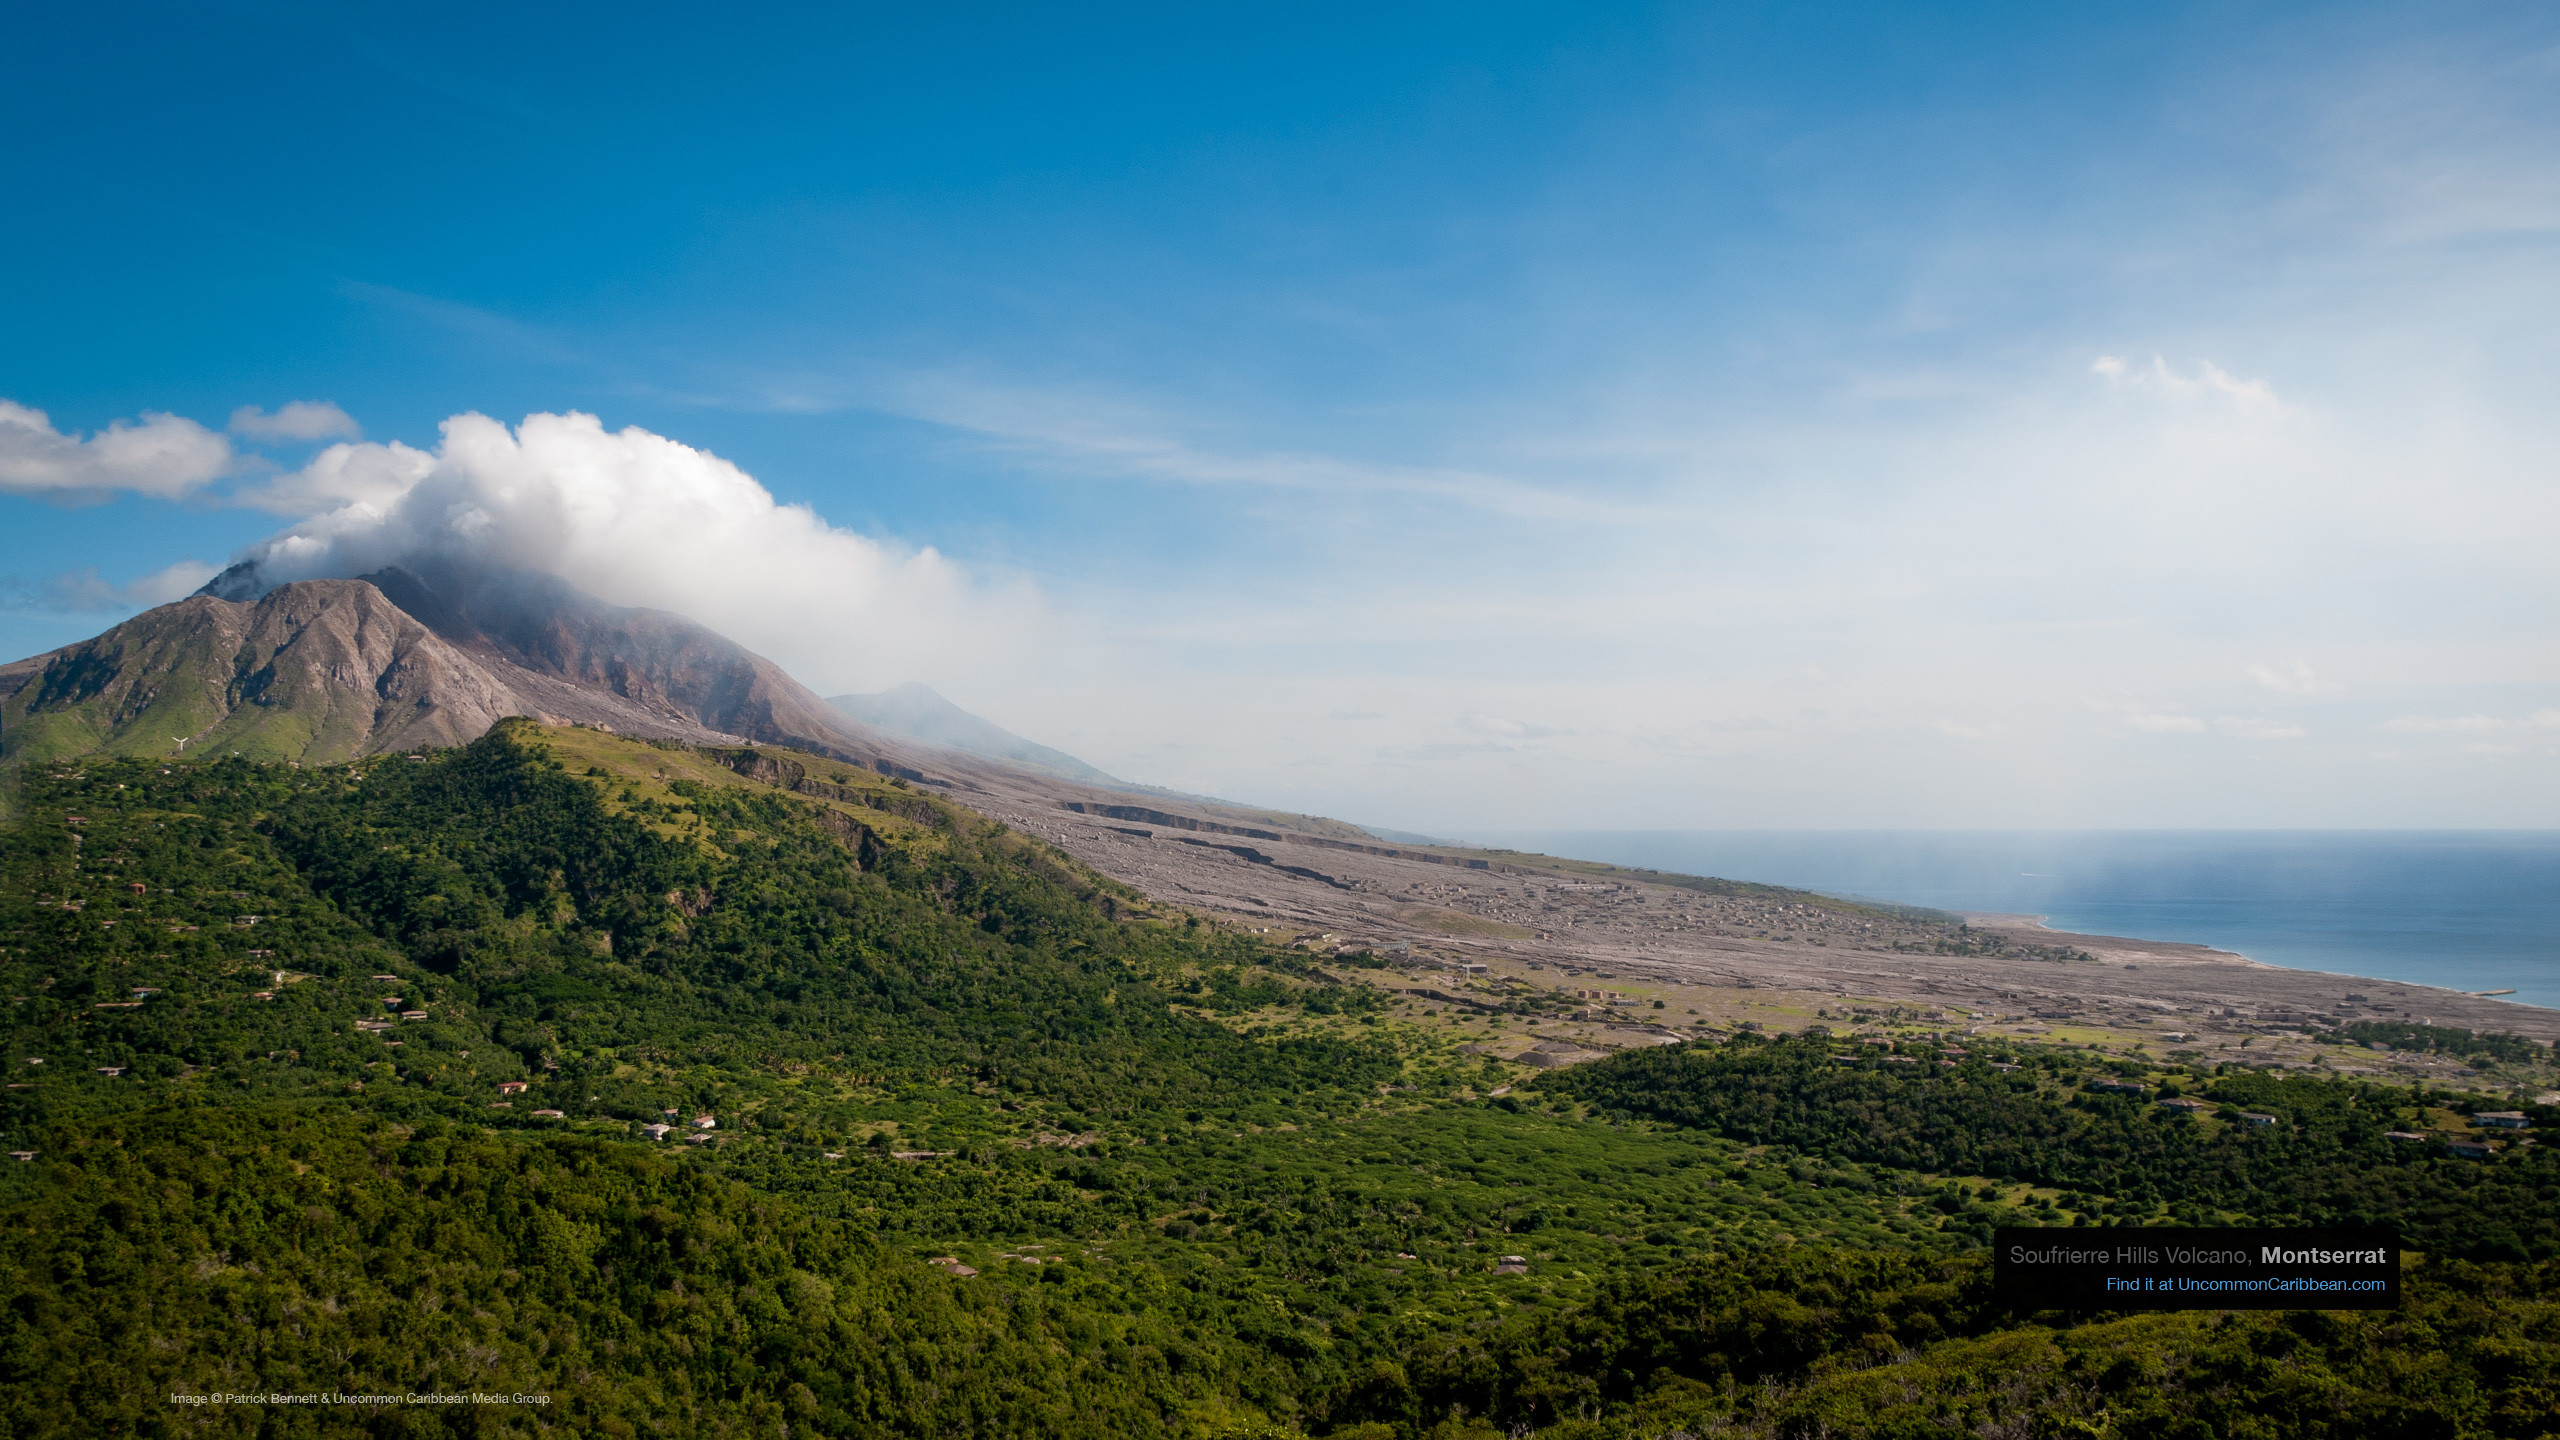 2560x1440 Soufrierre Hills Volcano, Montserrat